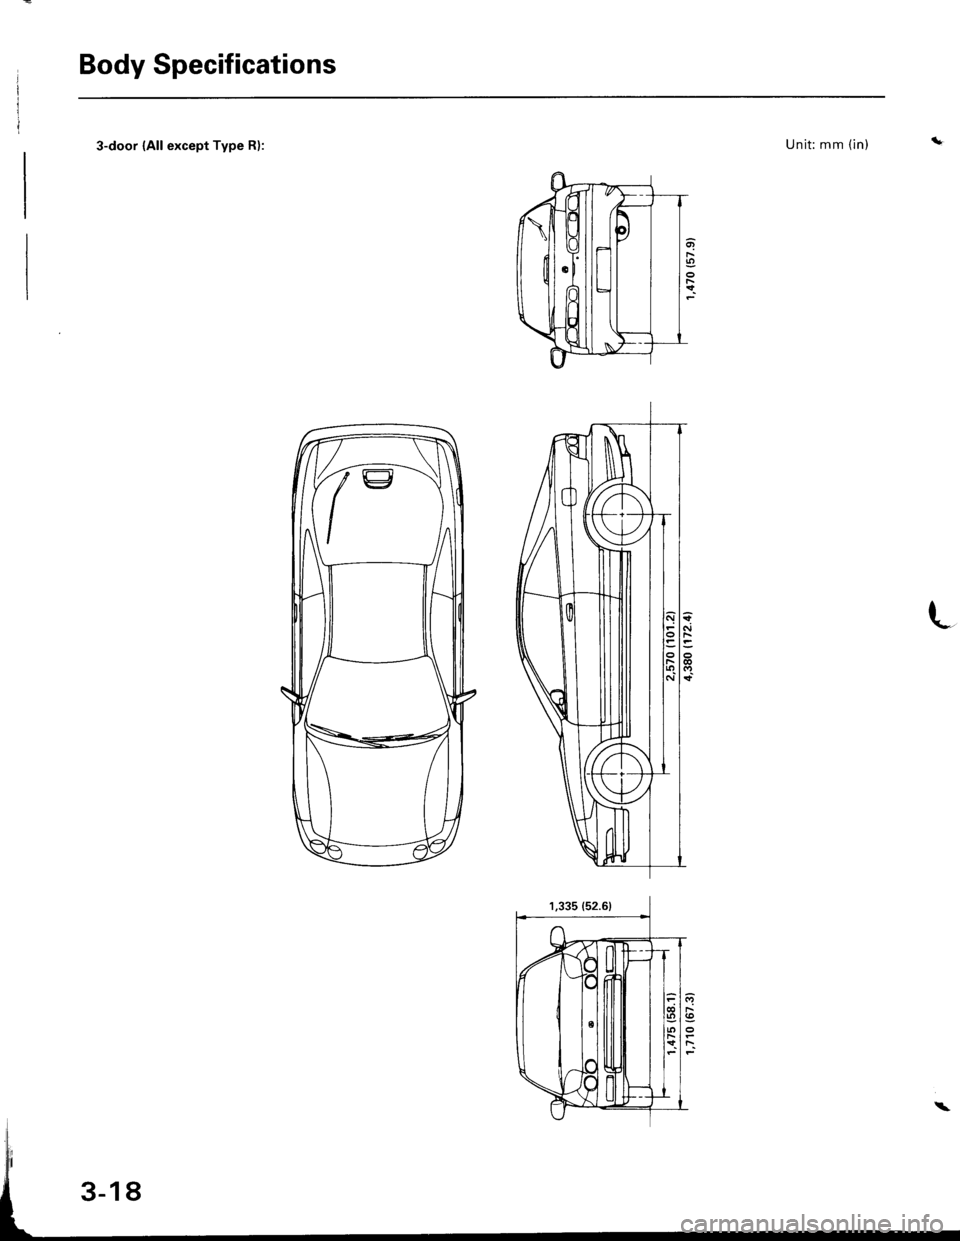 HONDA INTEGRA 1998 4.G Workshop Manual Body Specifications
3-door (All except Type R):Unit: mm (in)
olFrtoFt
(
t
b|rlr 